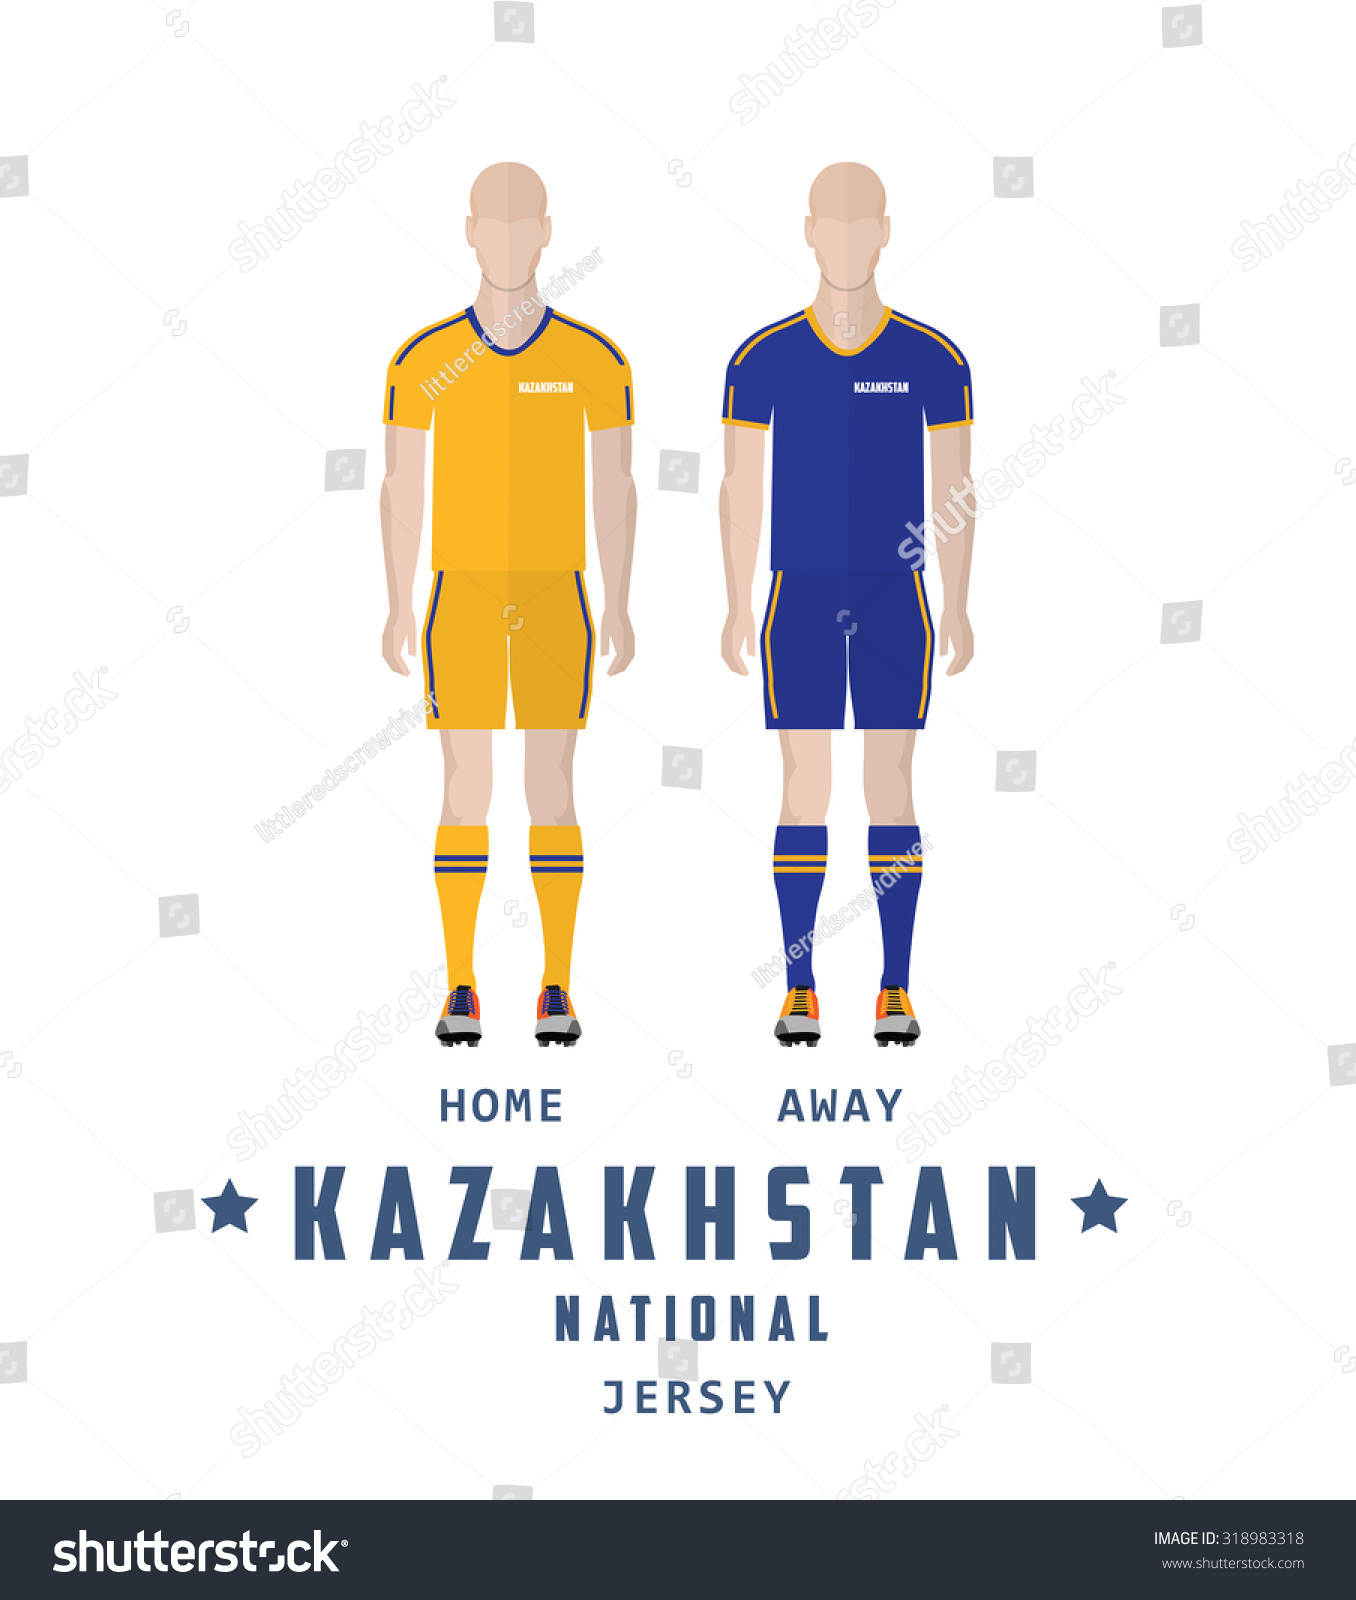 kazakhstan soccer jersey